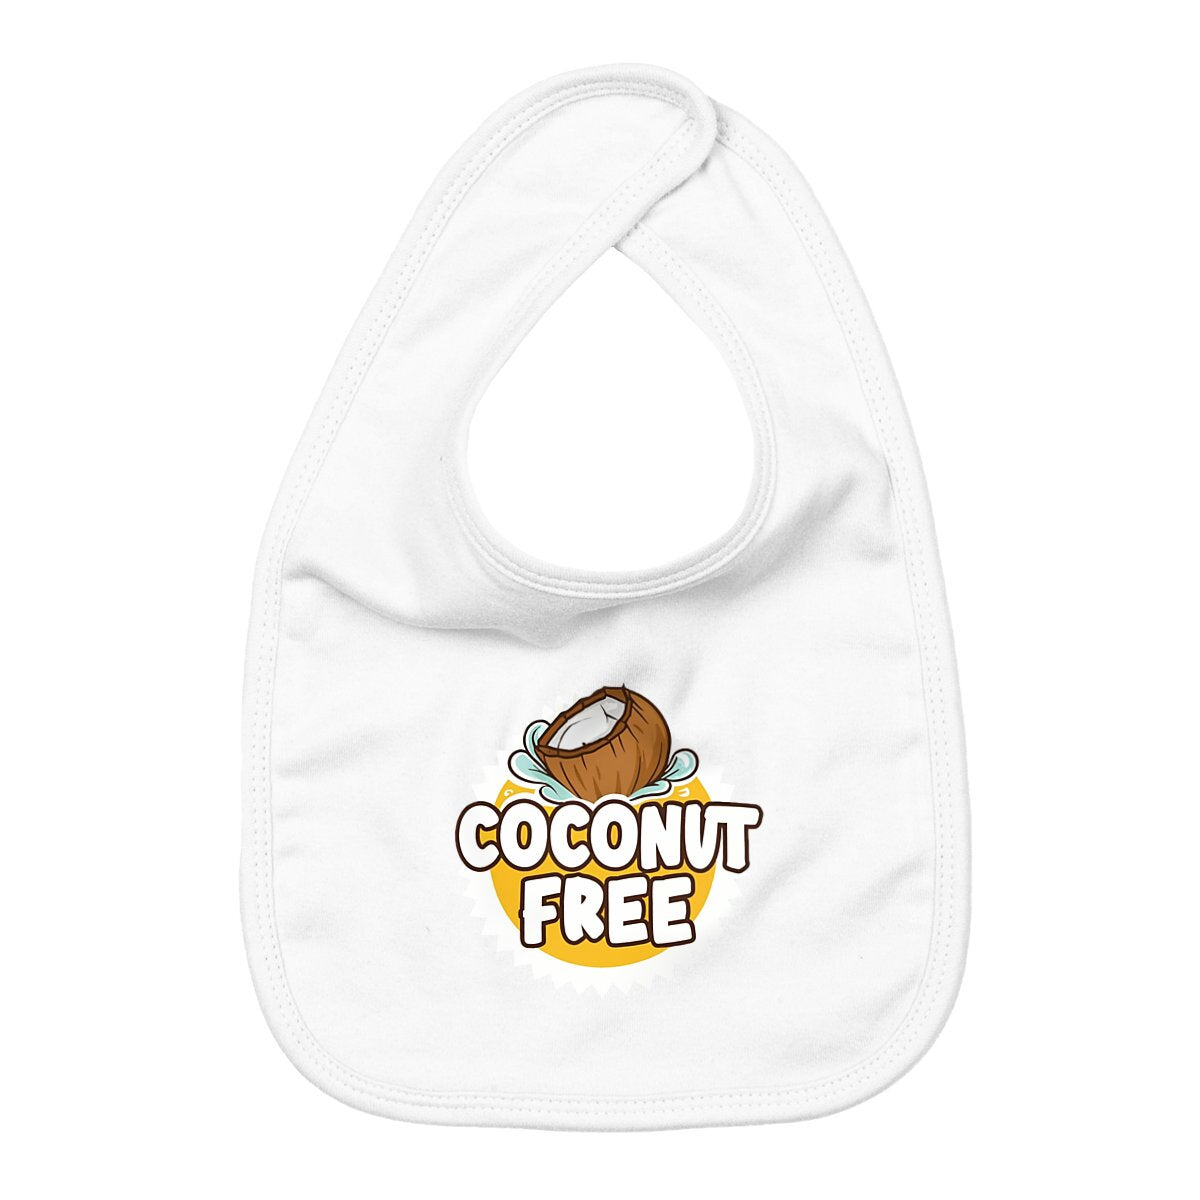 Coconut Free Organic Cotton Graphic Baby Bib | Hypoallergenic - Allergy Friendly - Naturally Free